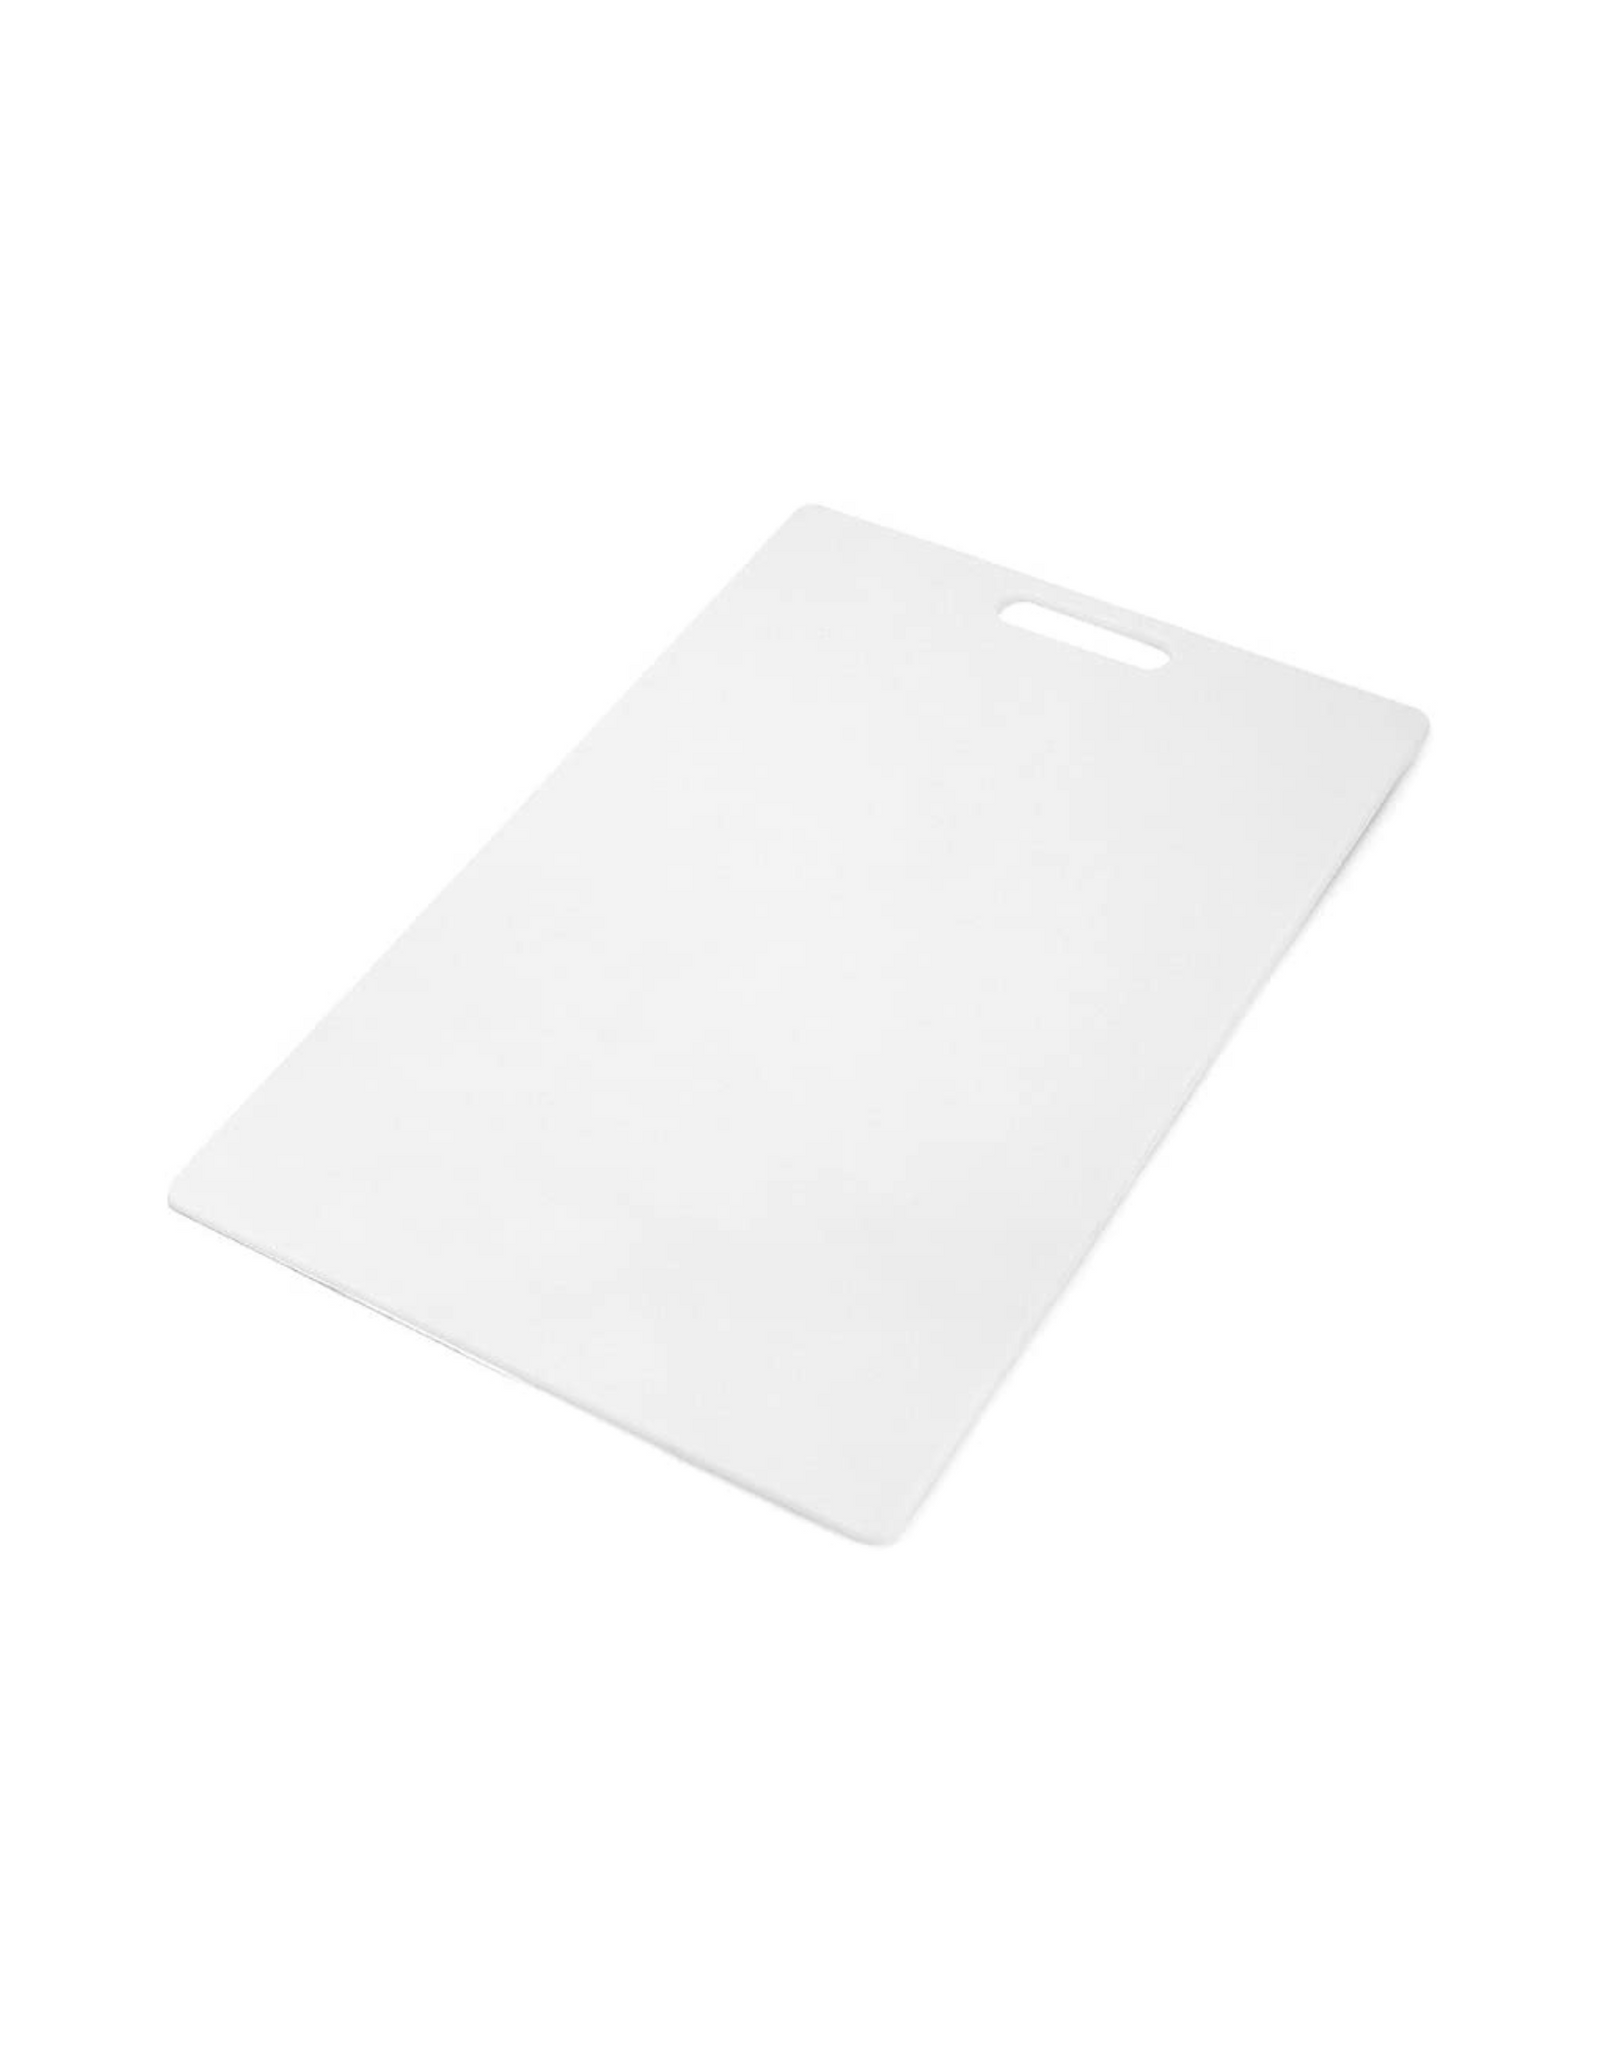 Farberware Poly Cutting Board 78900-10, 12 Inch by 18 Inch, White